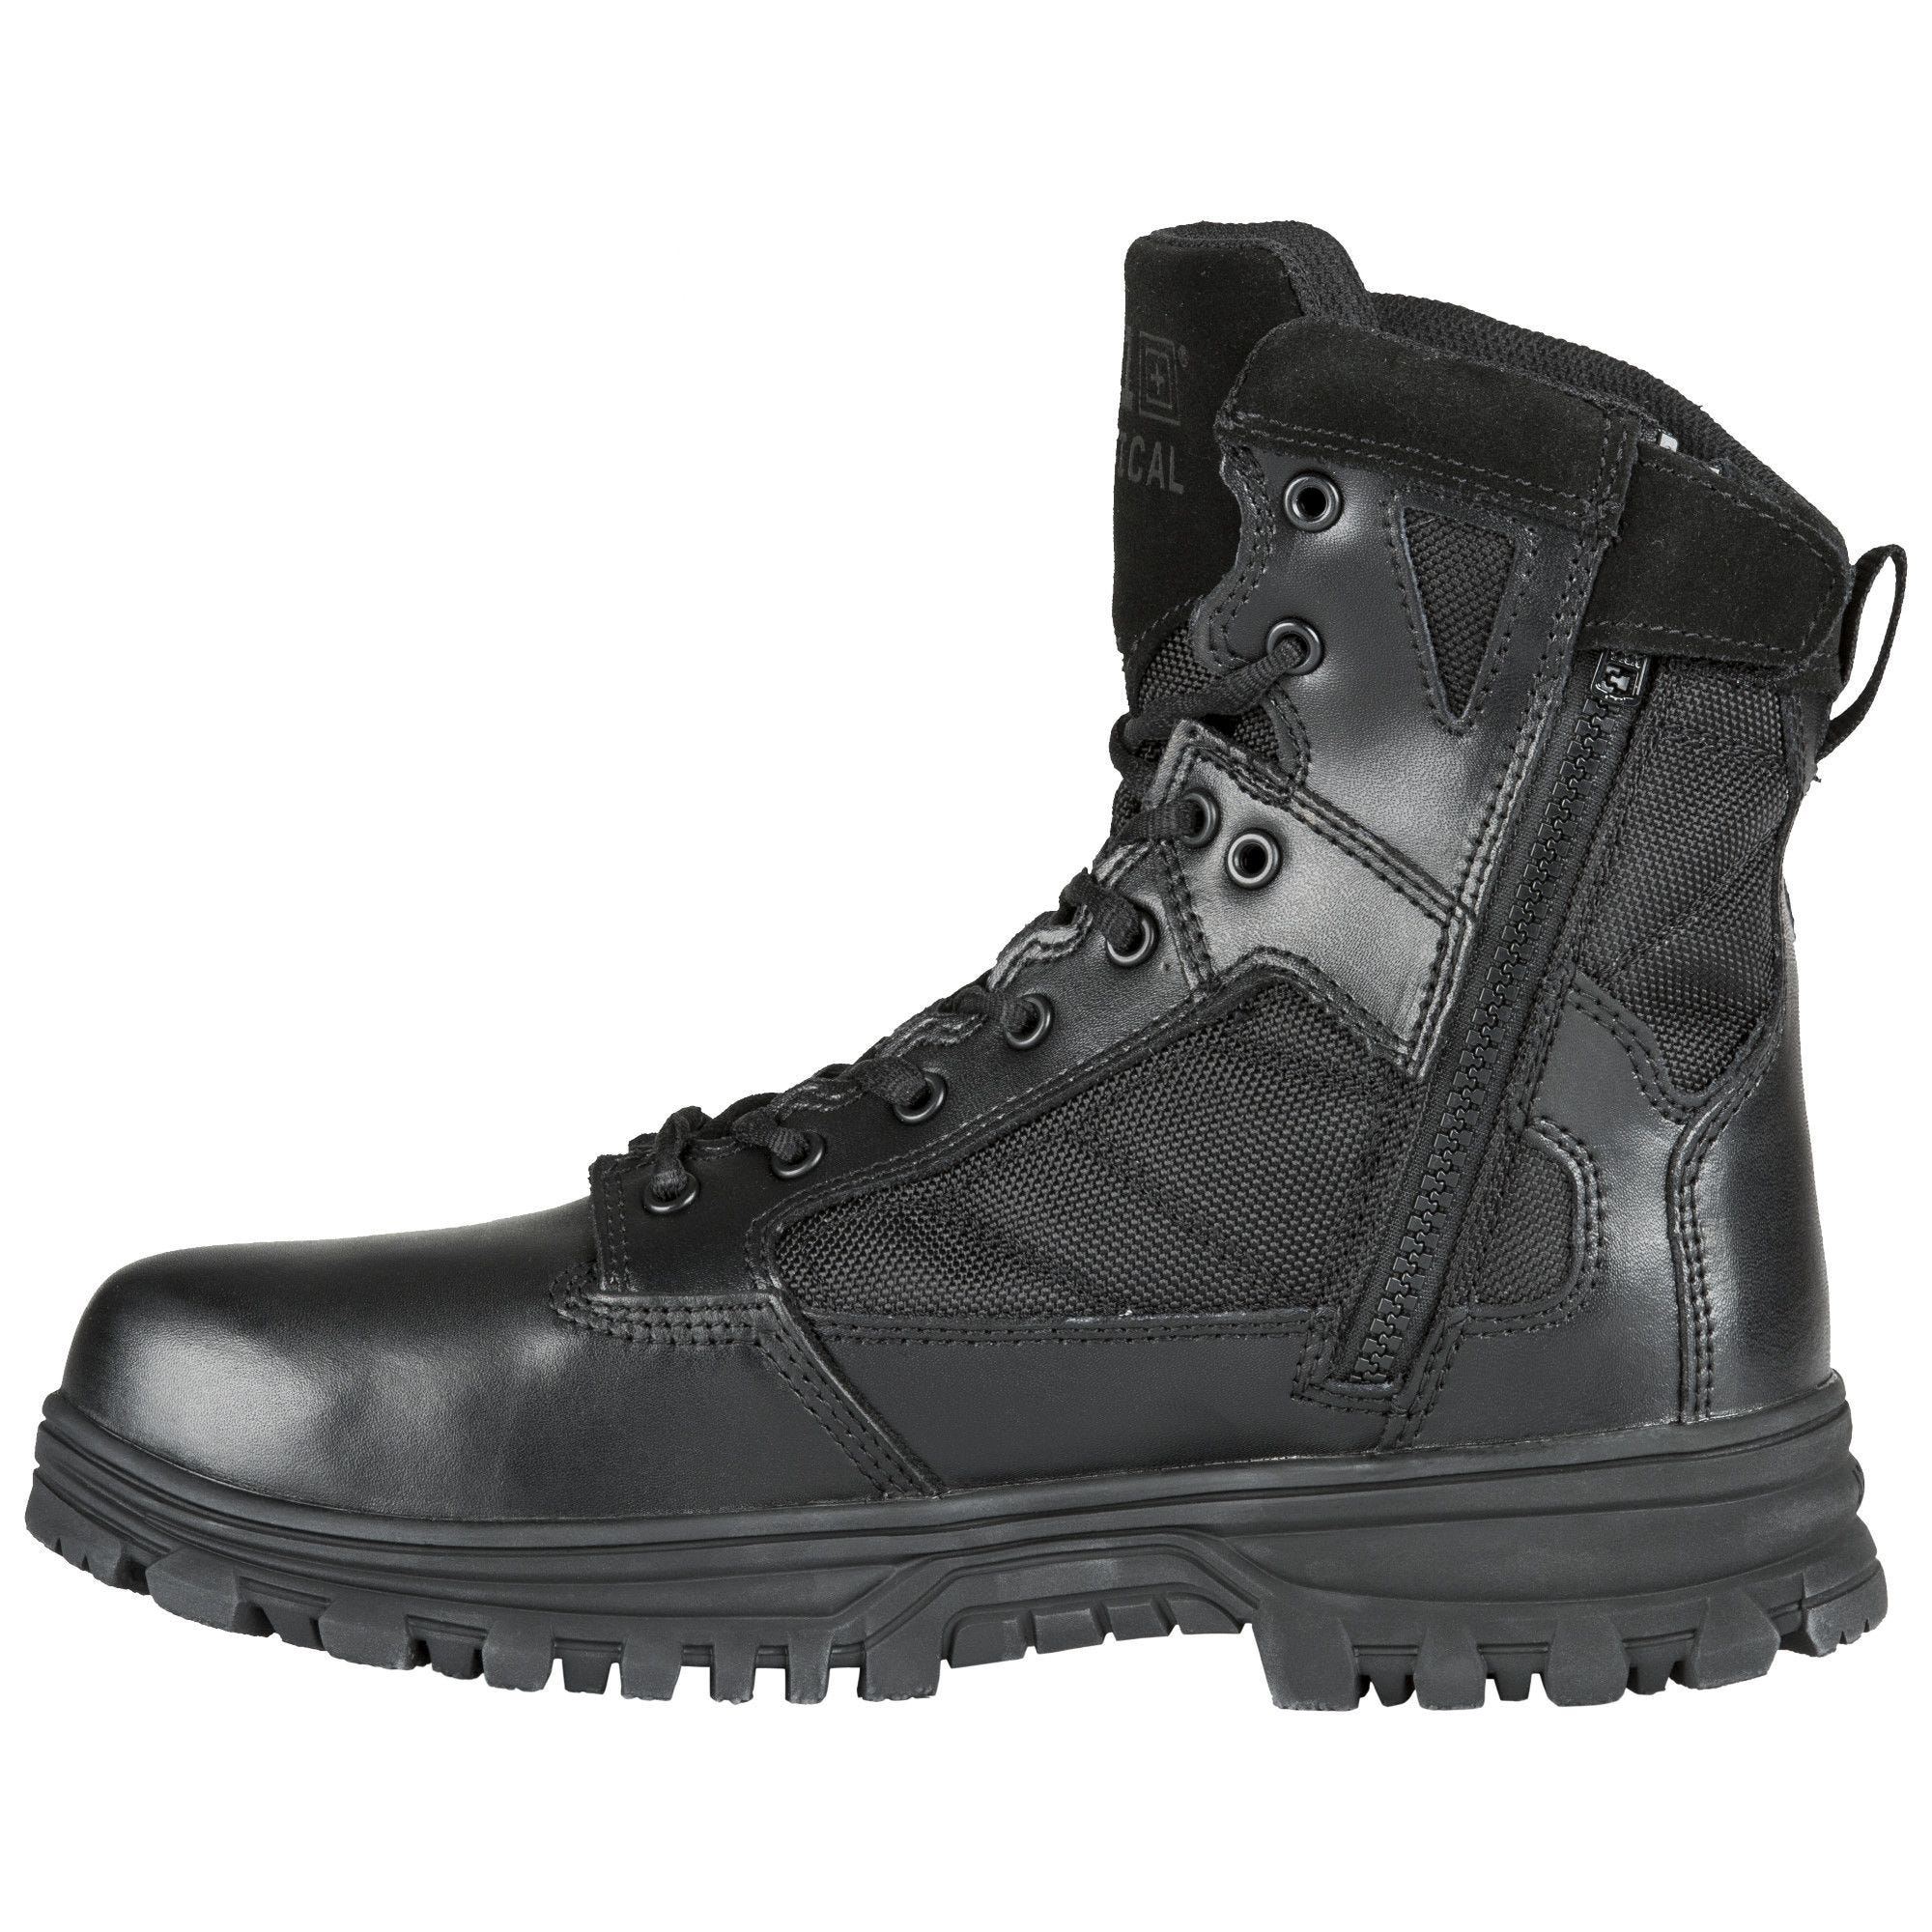 5.11 Tactical EVO 6-inch Waterproof SideZip Boots Footwear 5.11 Tactical Tactical Gear Supplier Tactical Distributors Australia